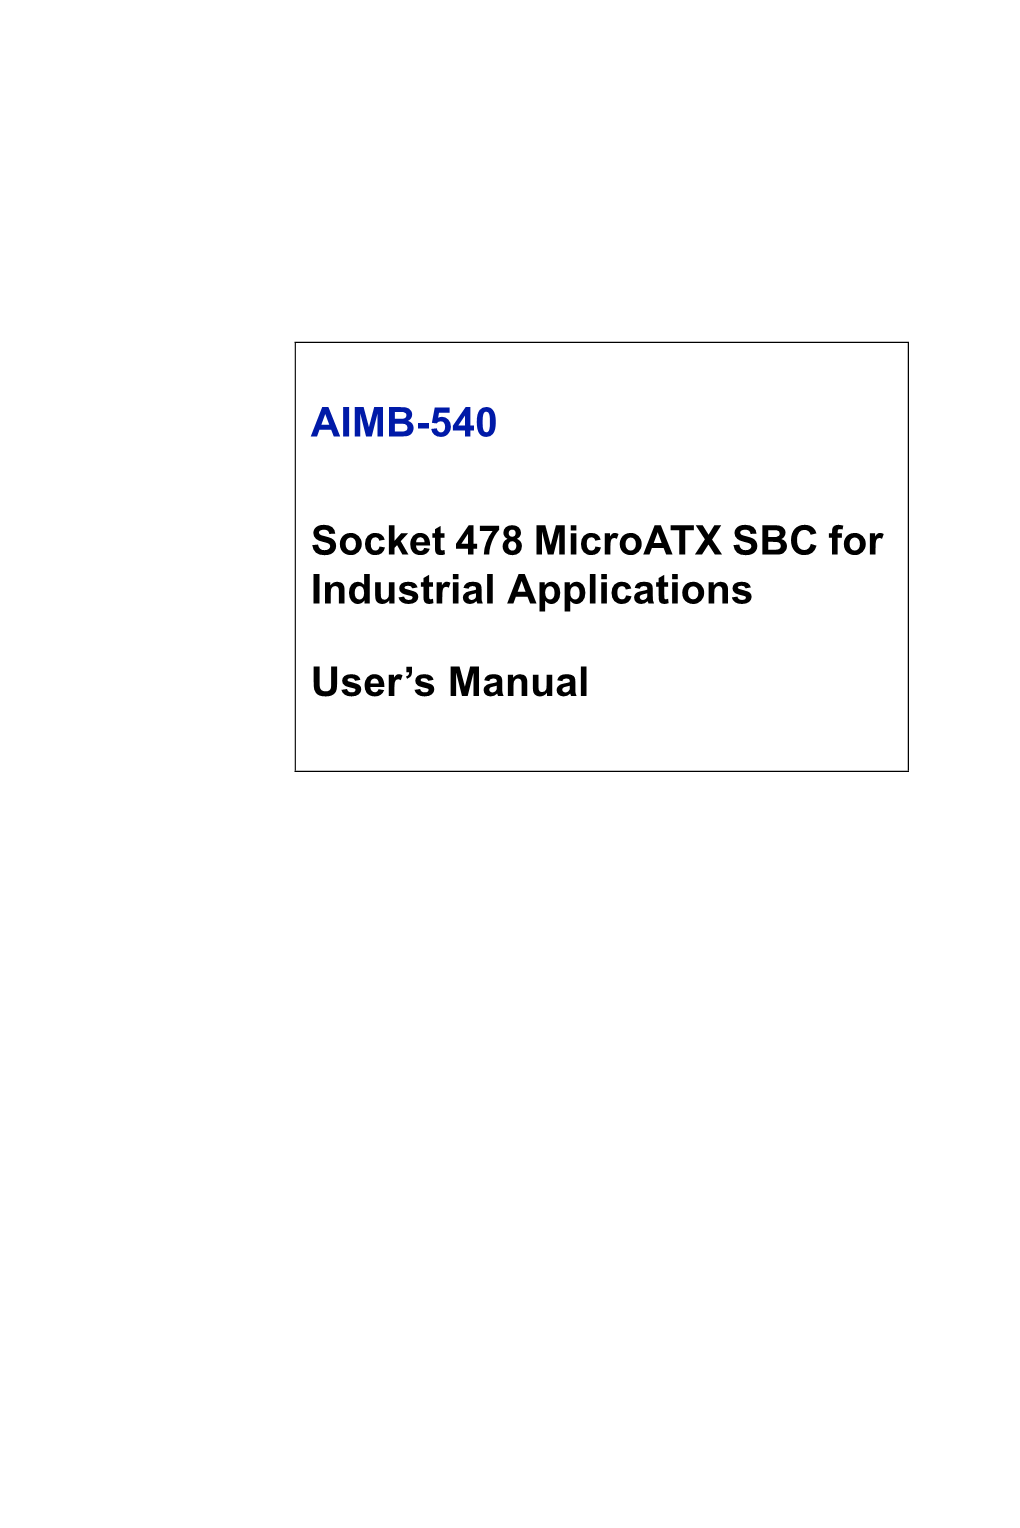 AIMB-540 Socket 478 Microatx SBC for Industrial Applications User's